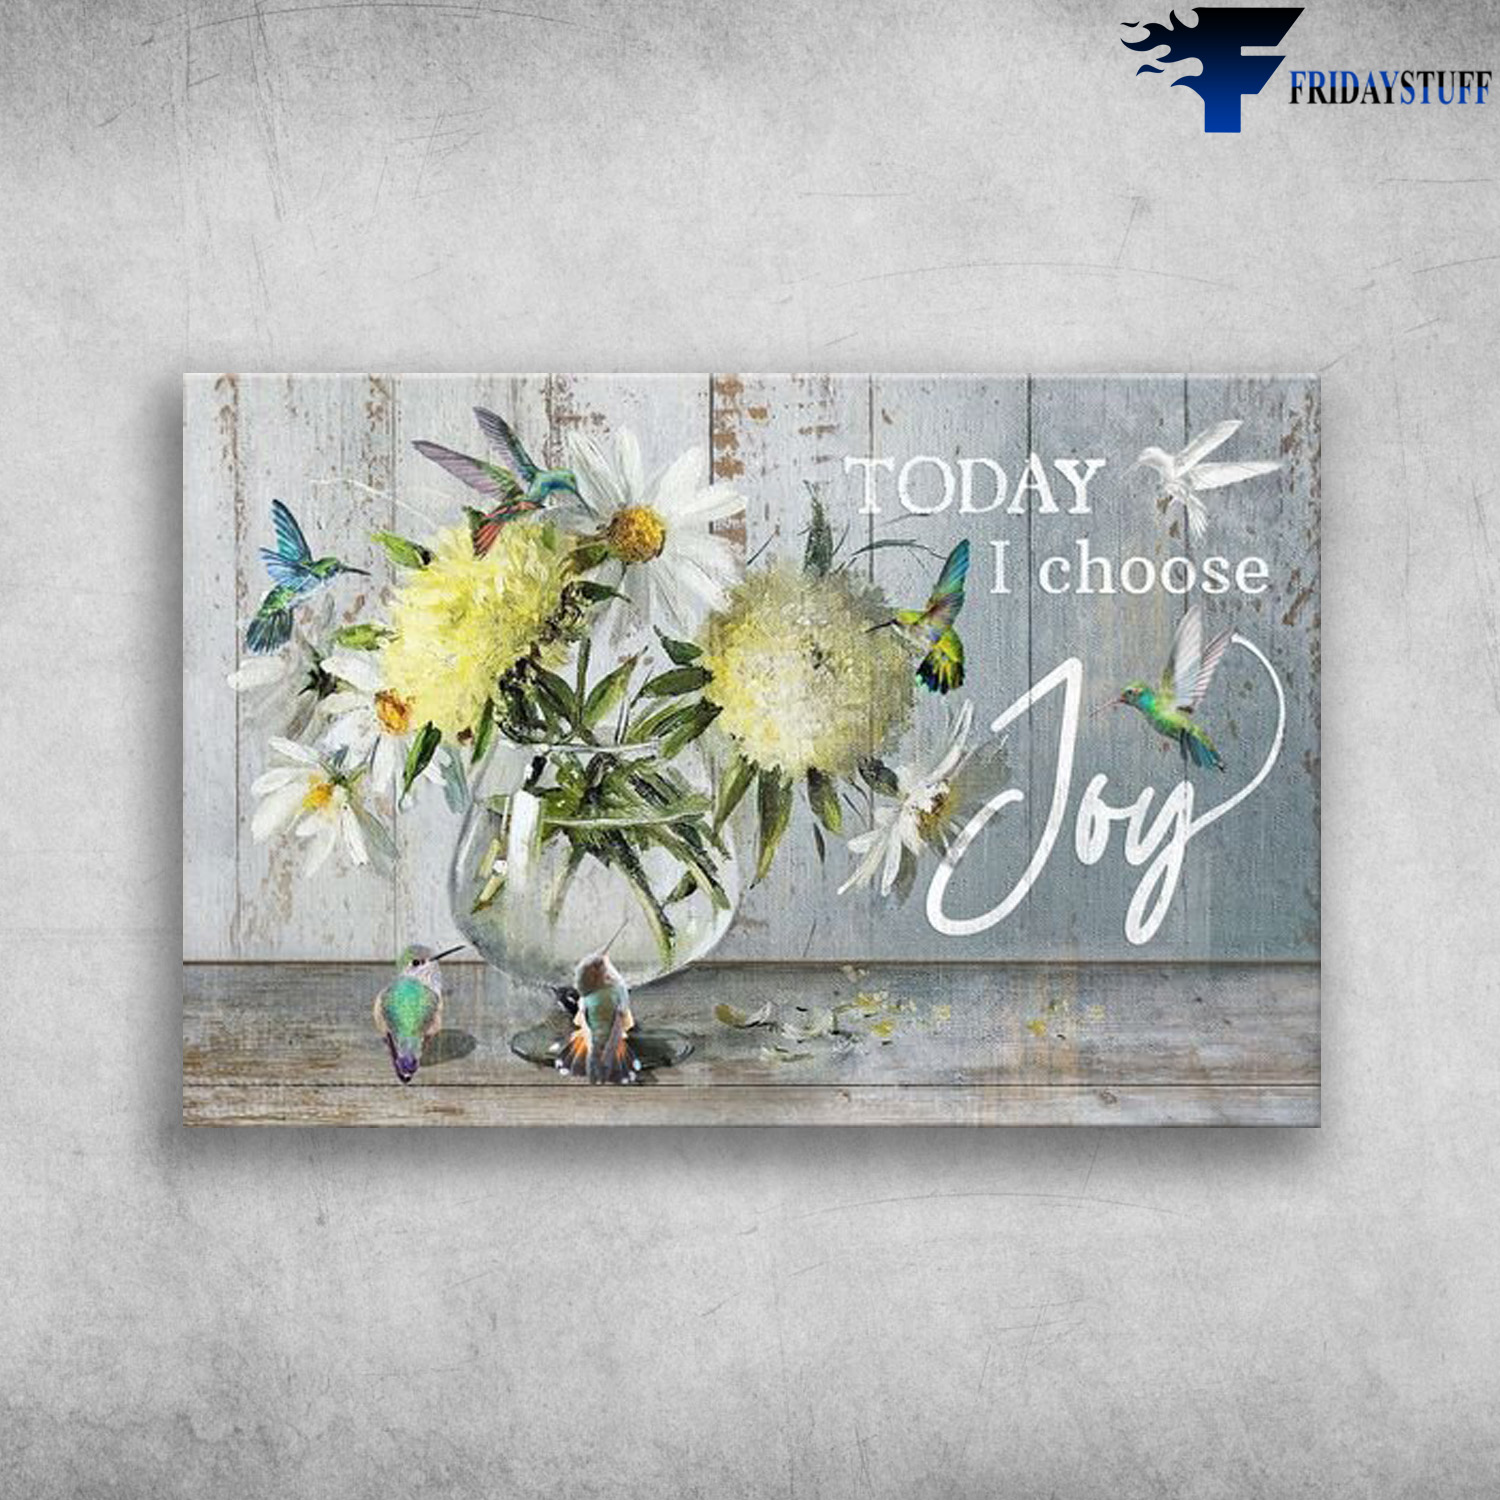 Hummingbirl And The Flower - Today I Choose Joy